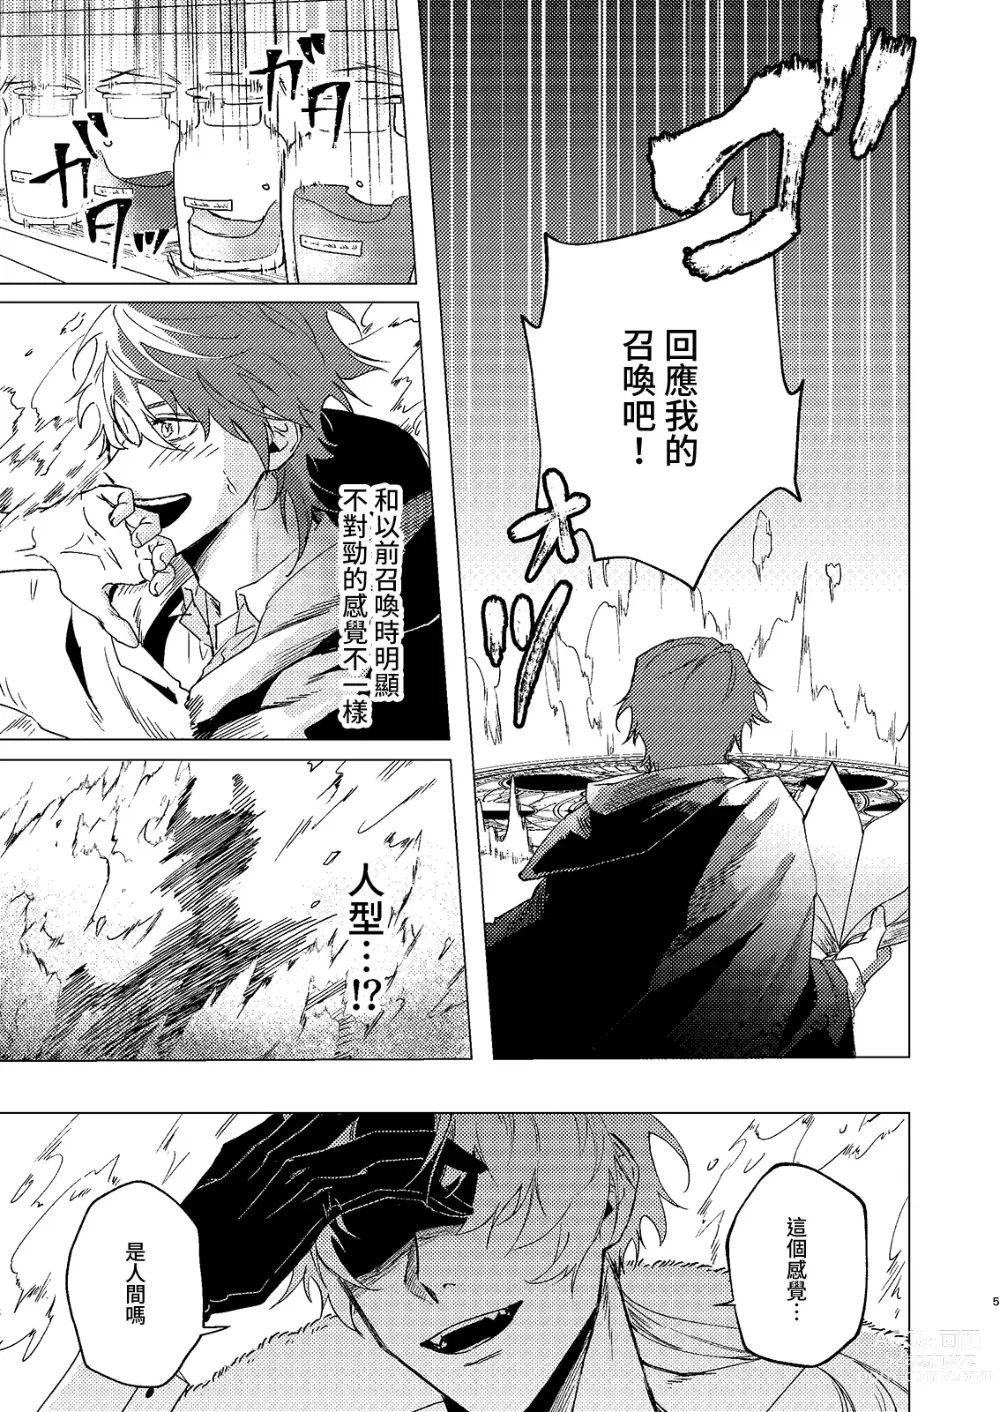 Page 4 of manga 多多调教我吧淫魔大人1